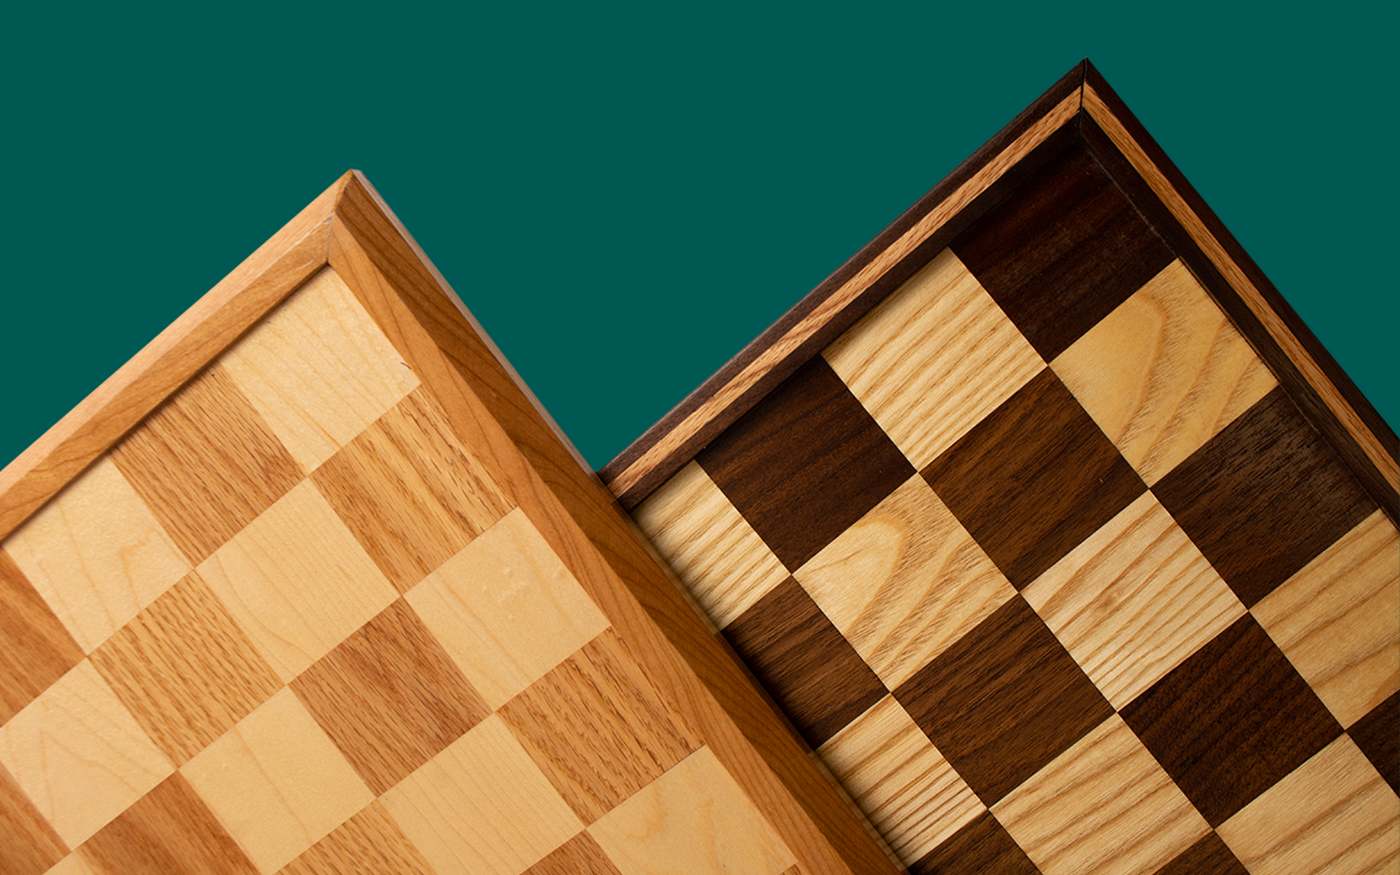 Forest 2 Home premium hardwood lumber chess board kits featuring hardwood species Ash wood, Walnut hardwood, Cherry wood, Hard Maple wood and Red Oak wood